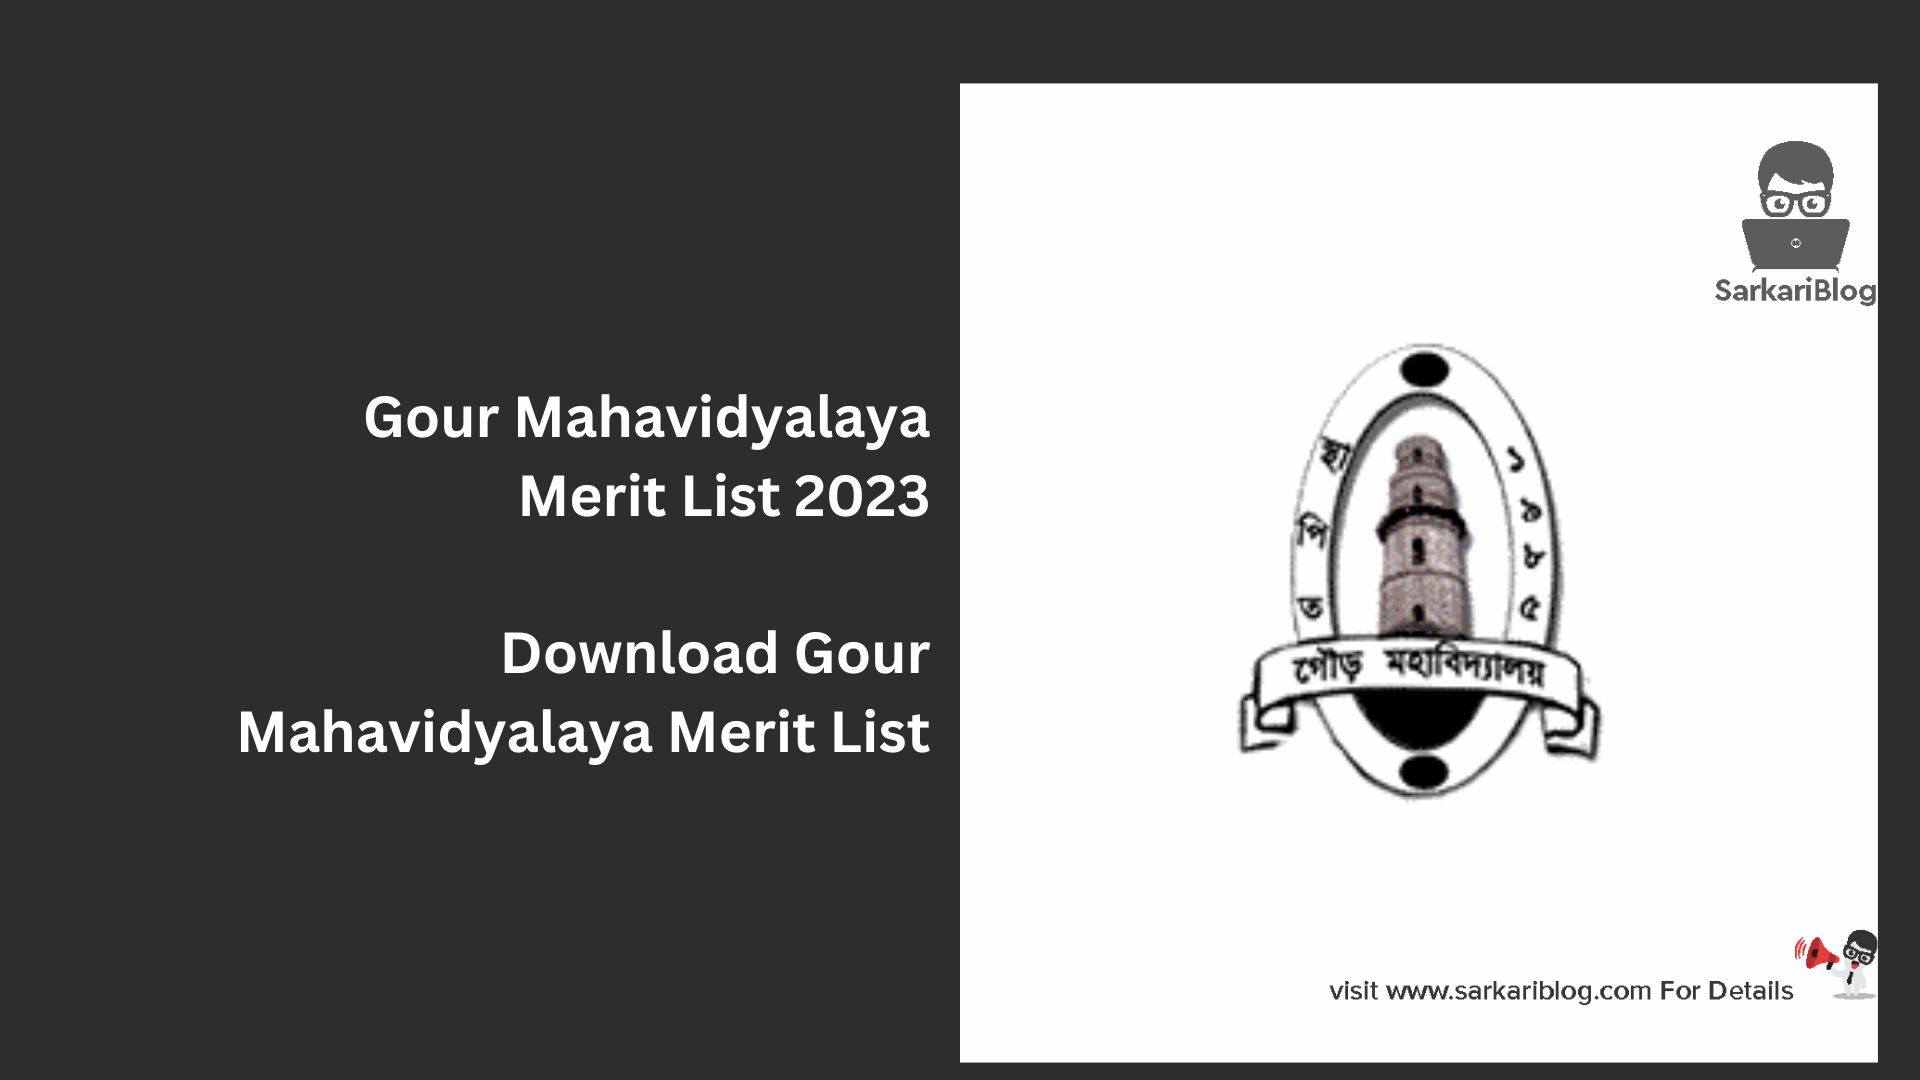 Gour Mahavidyalaya Merit List 2023